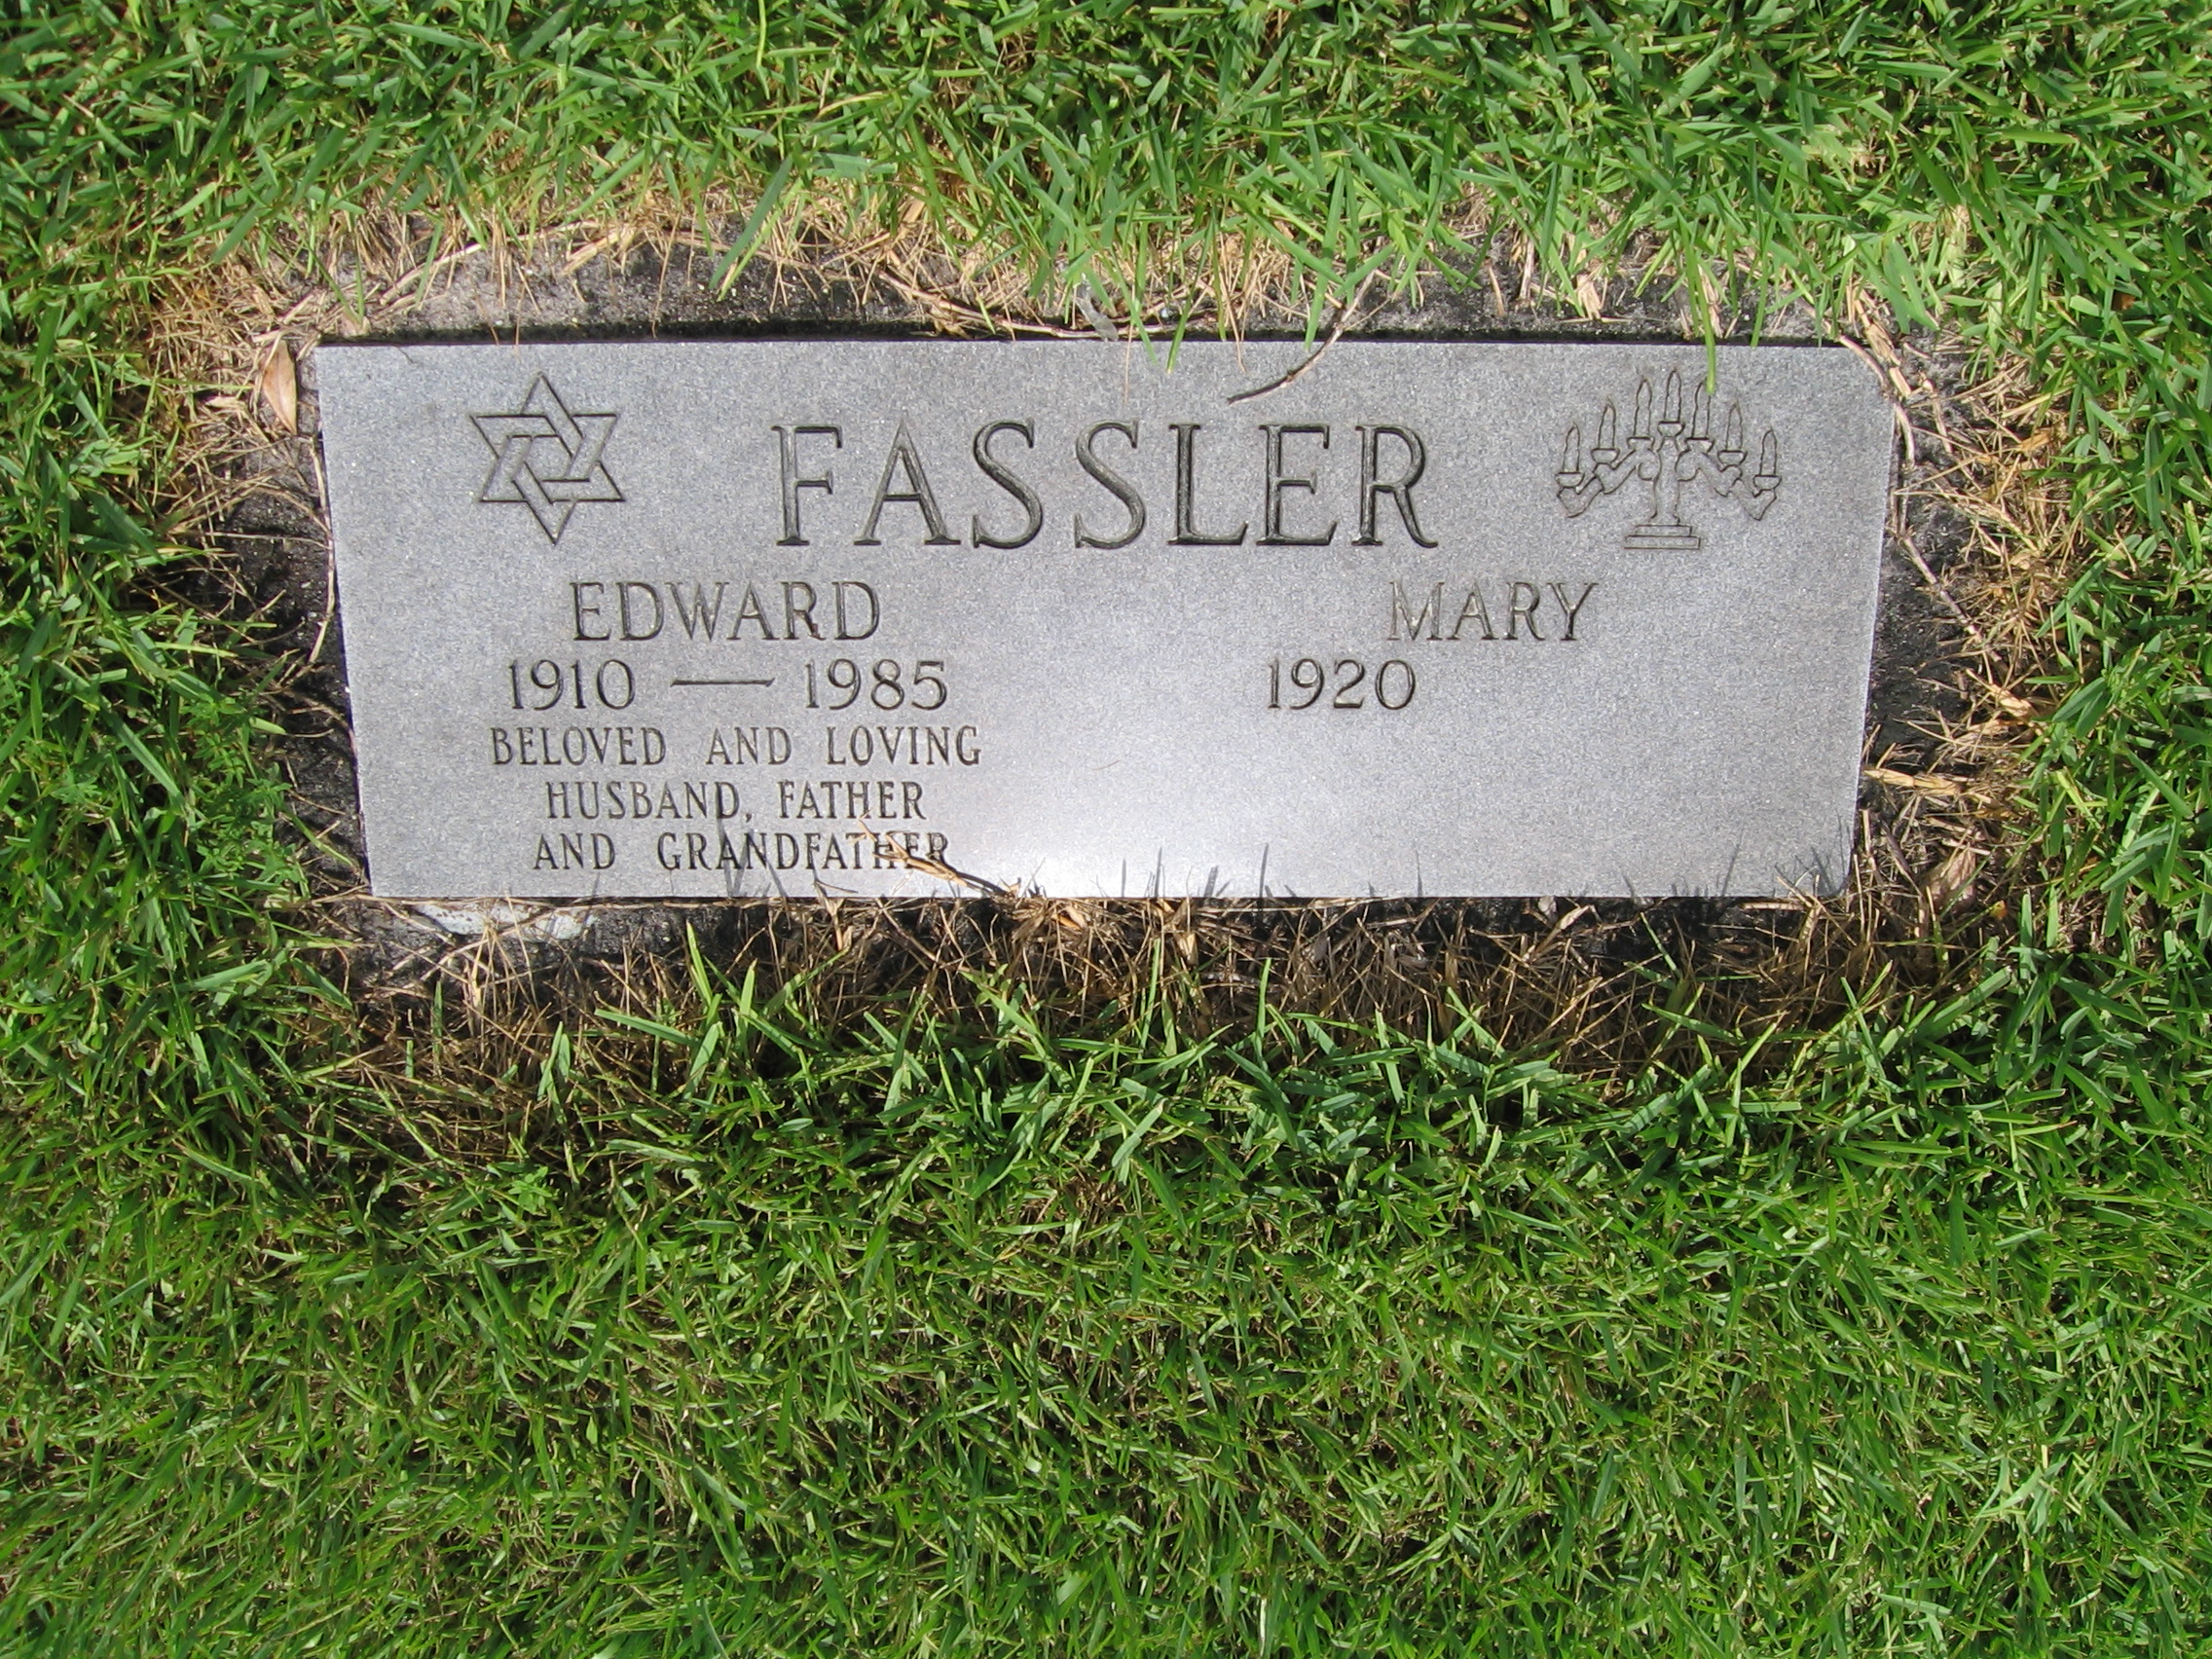 Edward Fassler